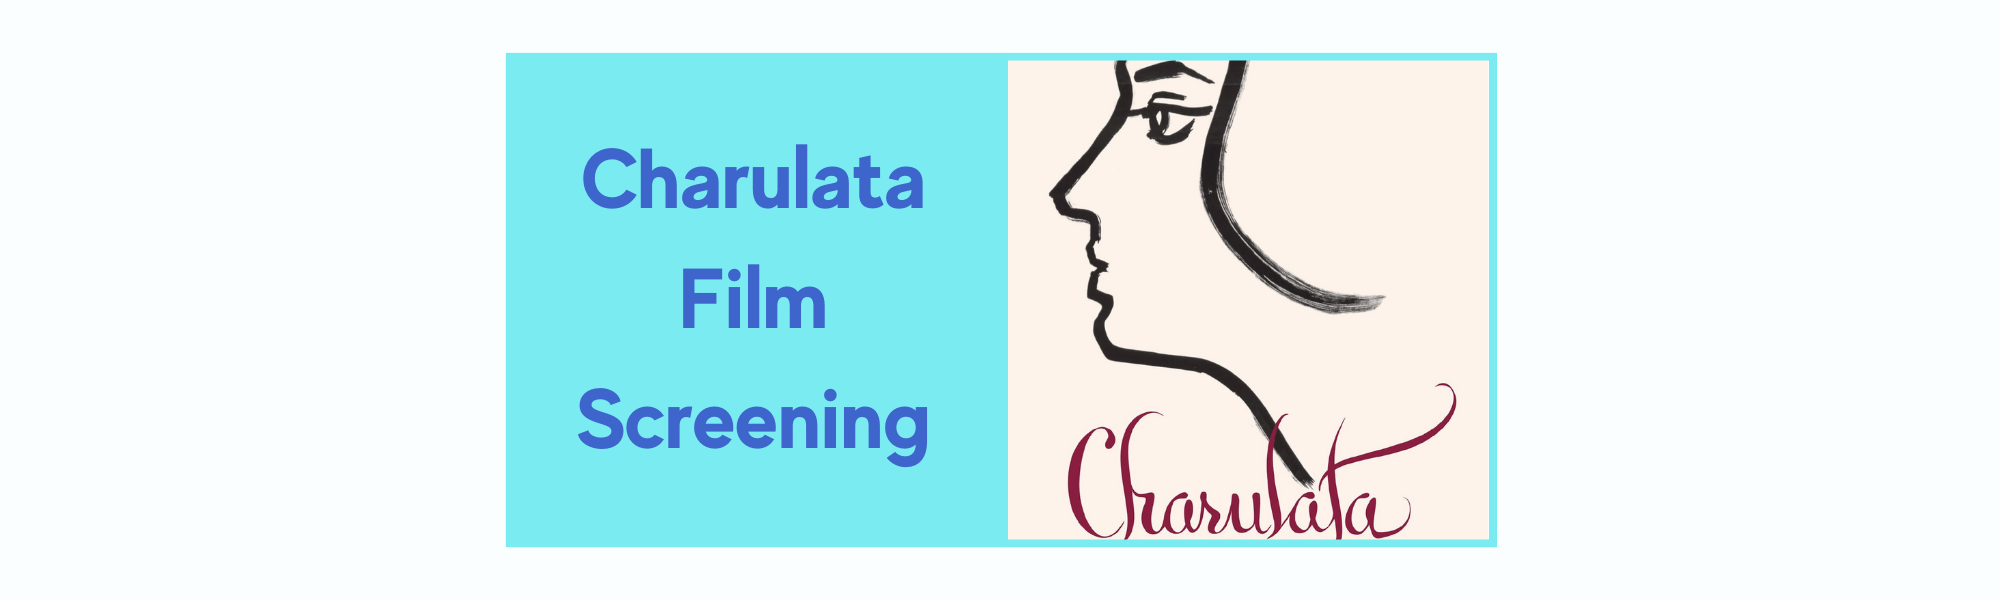 Charulata-Film-Screening.png